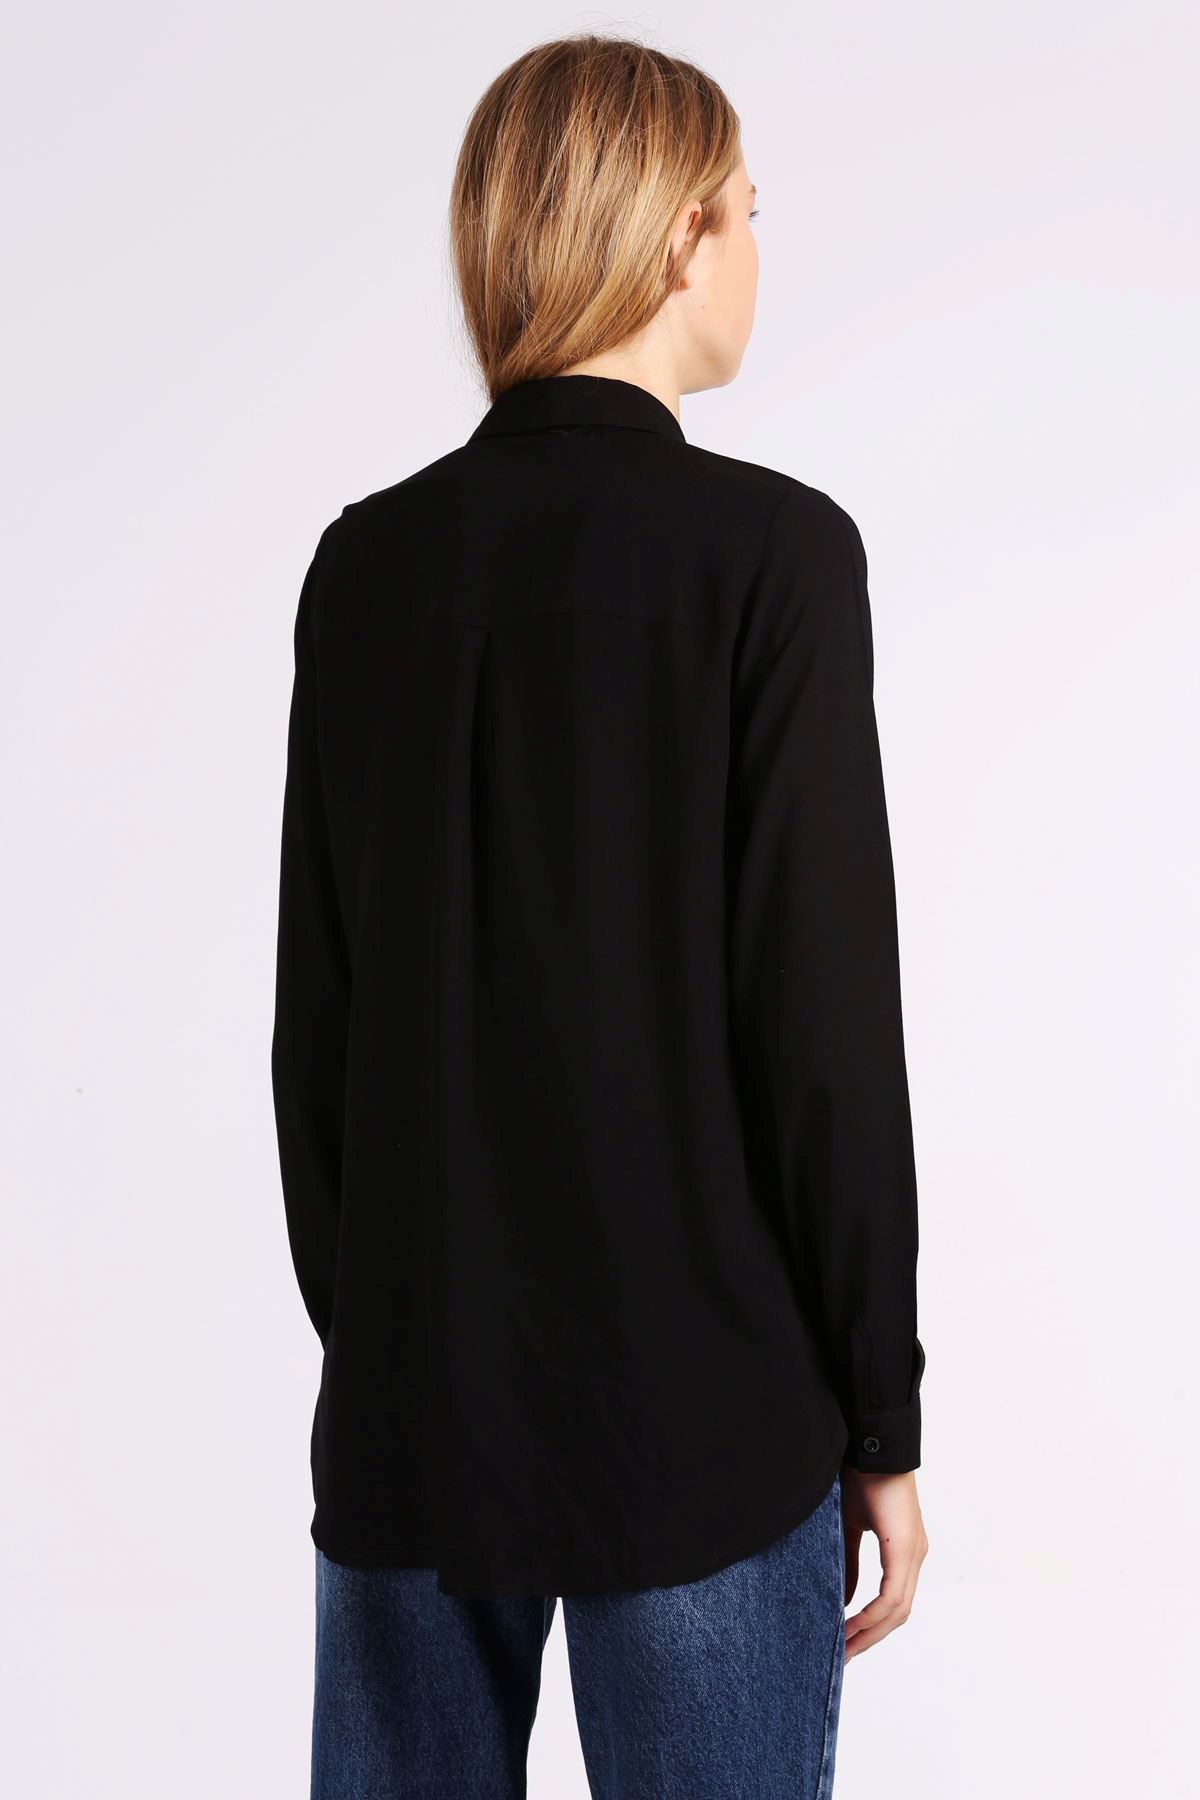 Giyinsen Kadın Siyah Gömlek - 24YM21000016